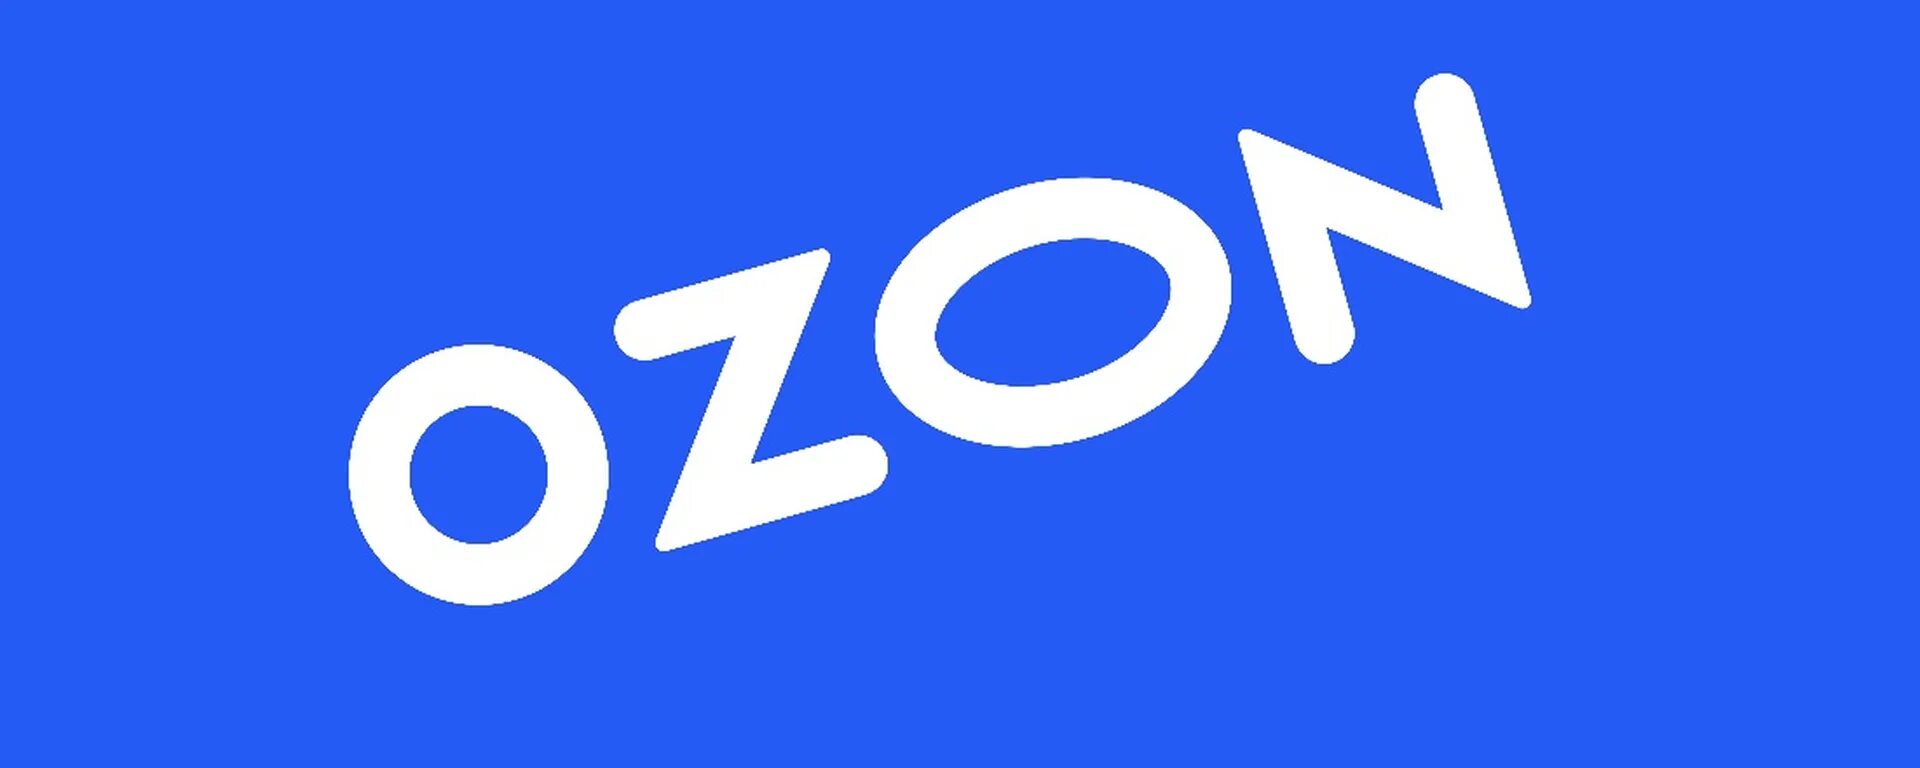 Озон быстро приходит. OZON. Ярлык Озон. OZON картинки. Логотип Озон круглый.